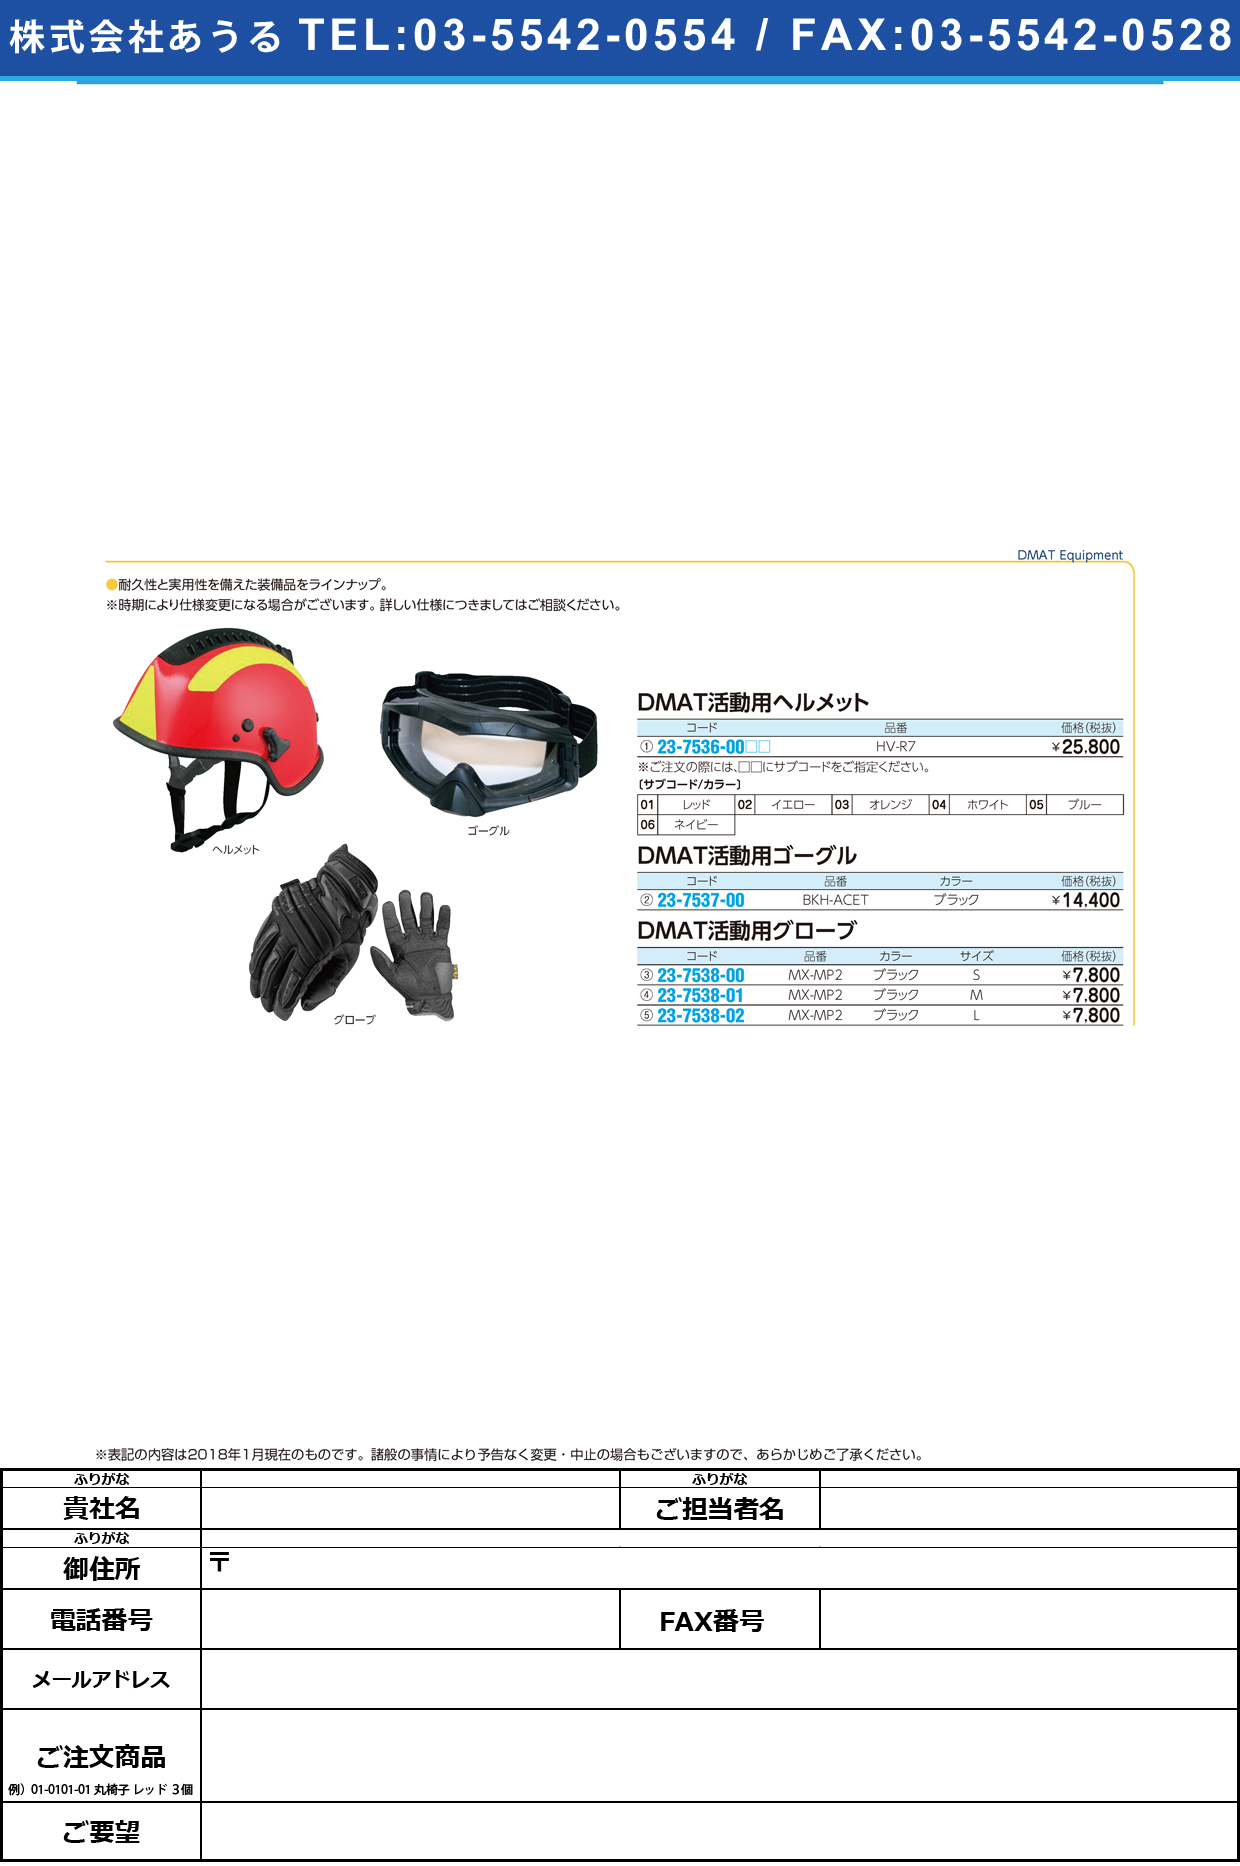 (23-7536-00)ＤＭＡＴ活動用ヘルメット HV-R7 DMATｶﾂﾄﾞｳﾖｳﾍﾙﾒｯﾄ レッド【1個単位】【2018年カタログ商品】